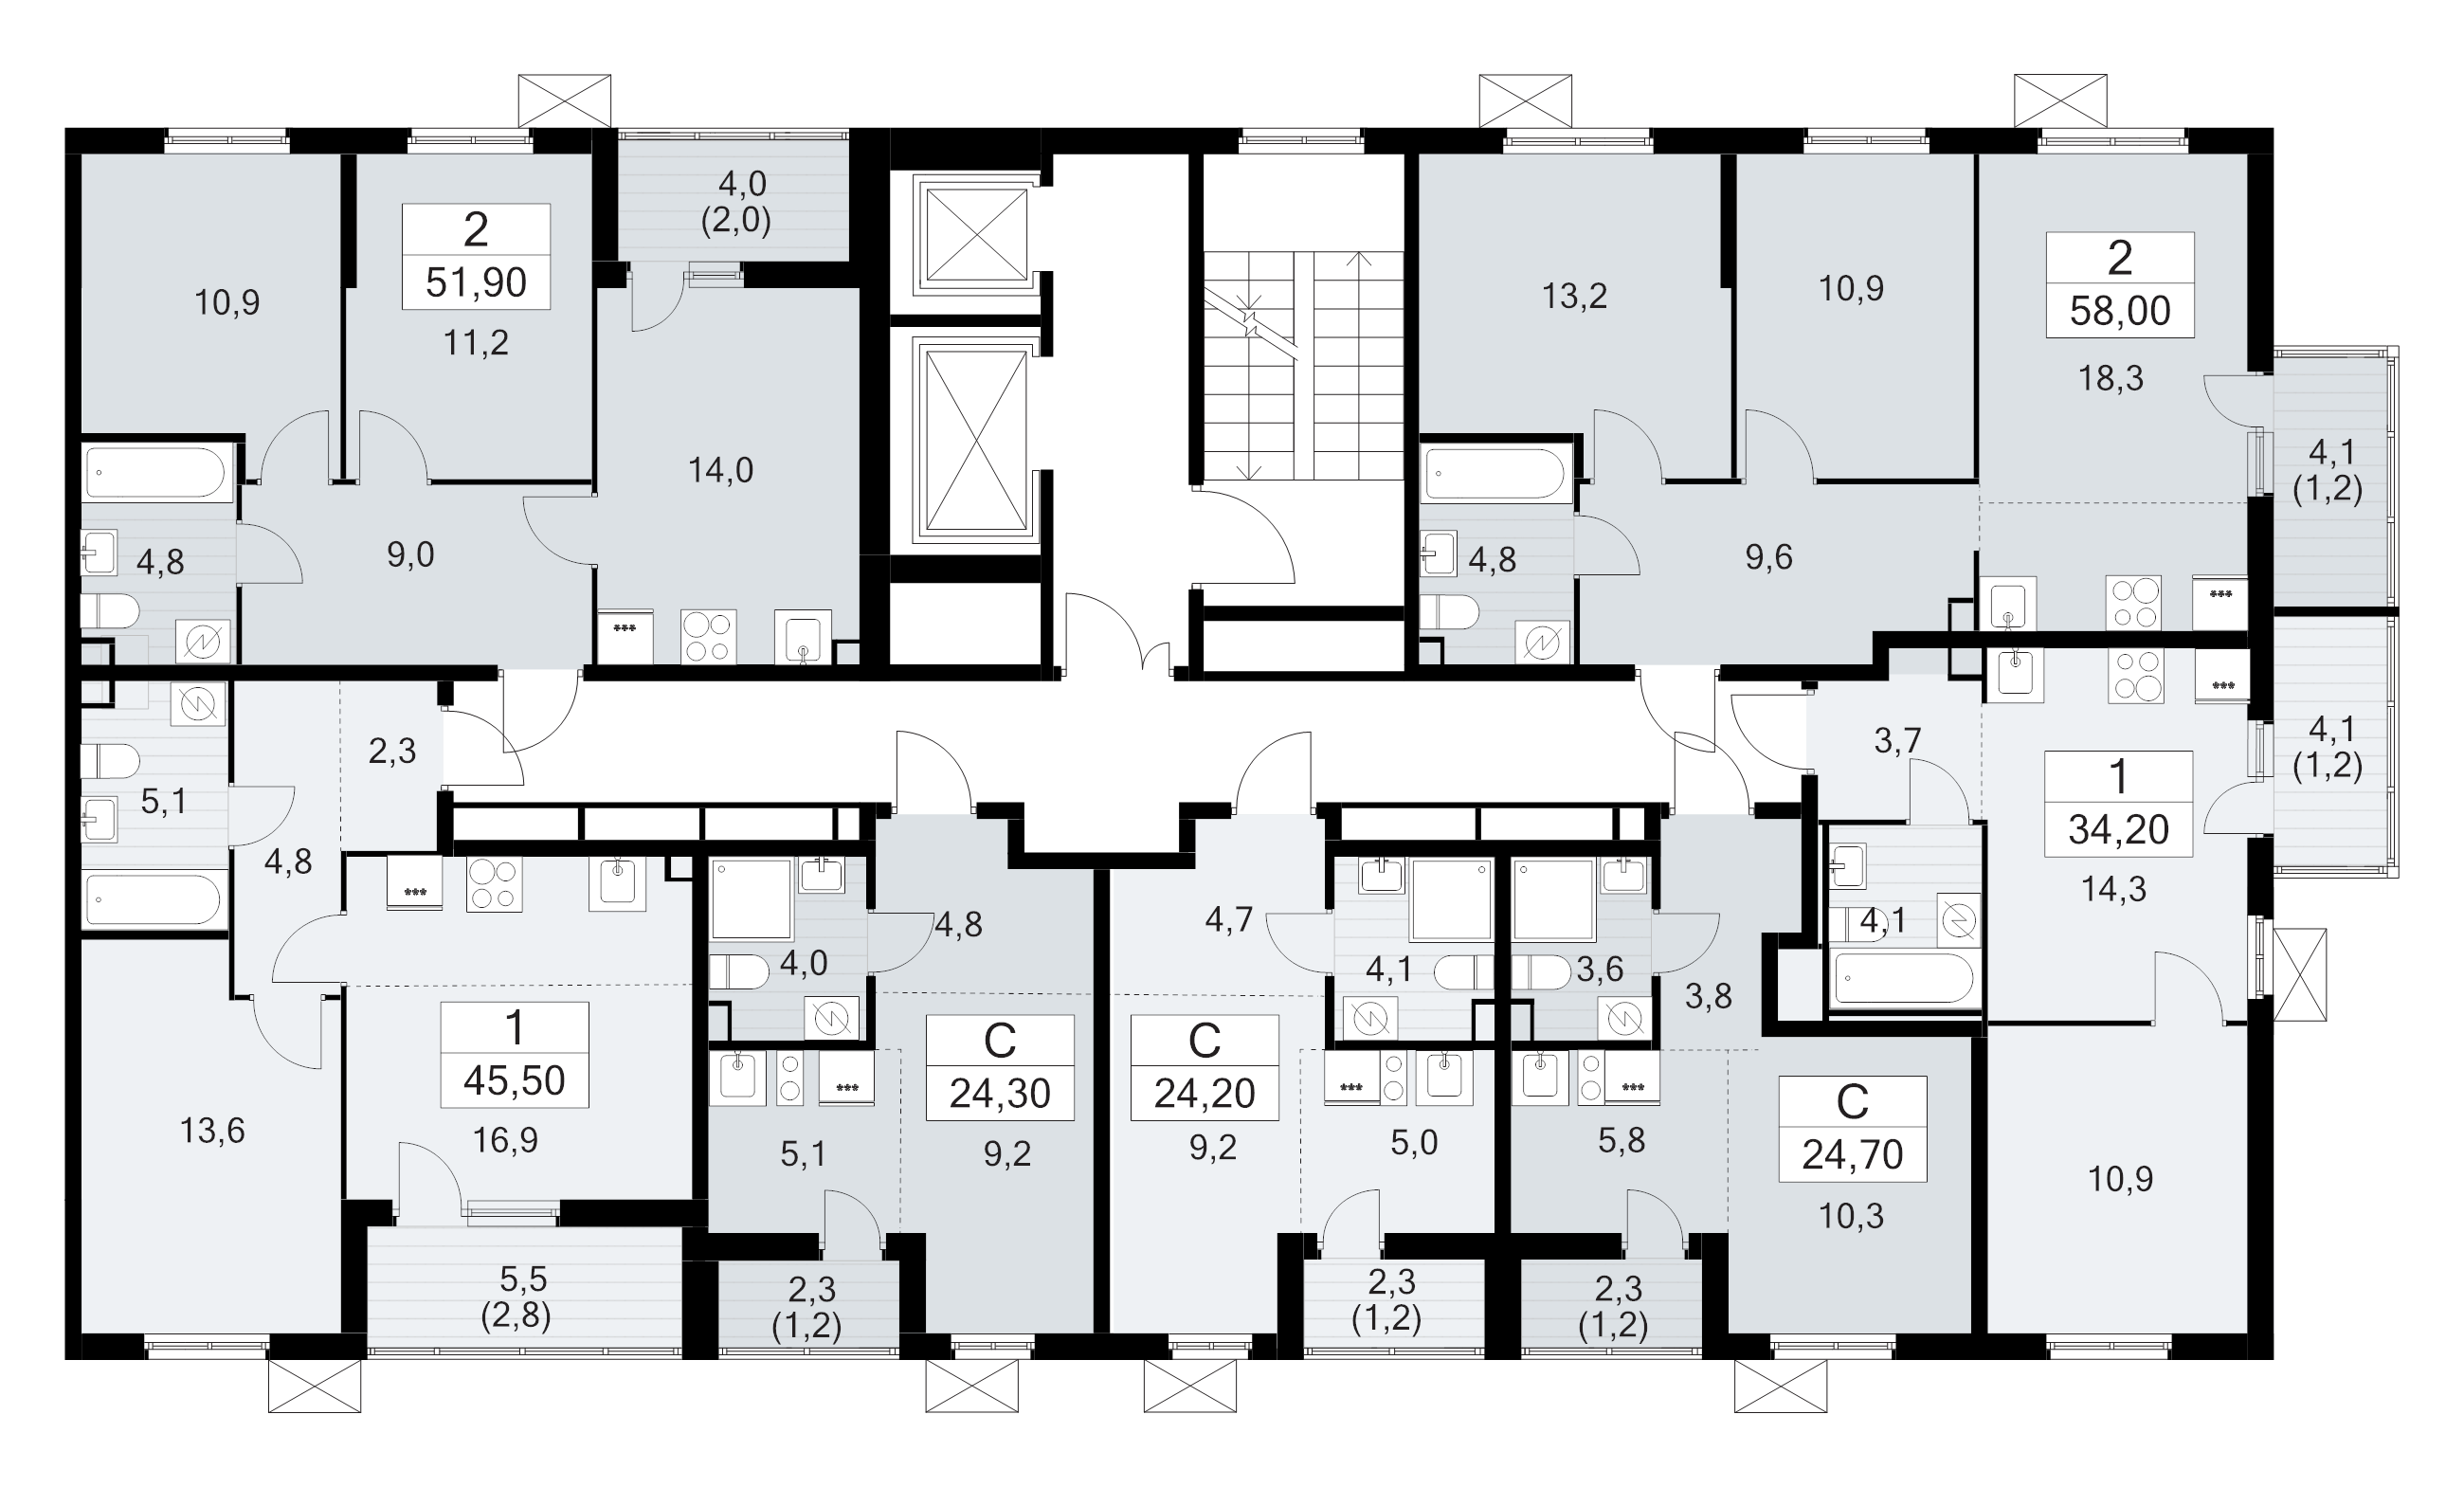 2-комнатная (Евро) квартира, 34.2 м² в ЖК "А101 Лаголово" - планировка этажа